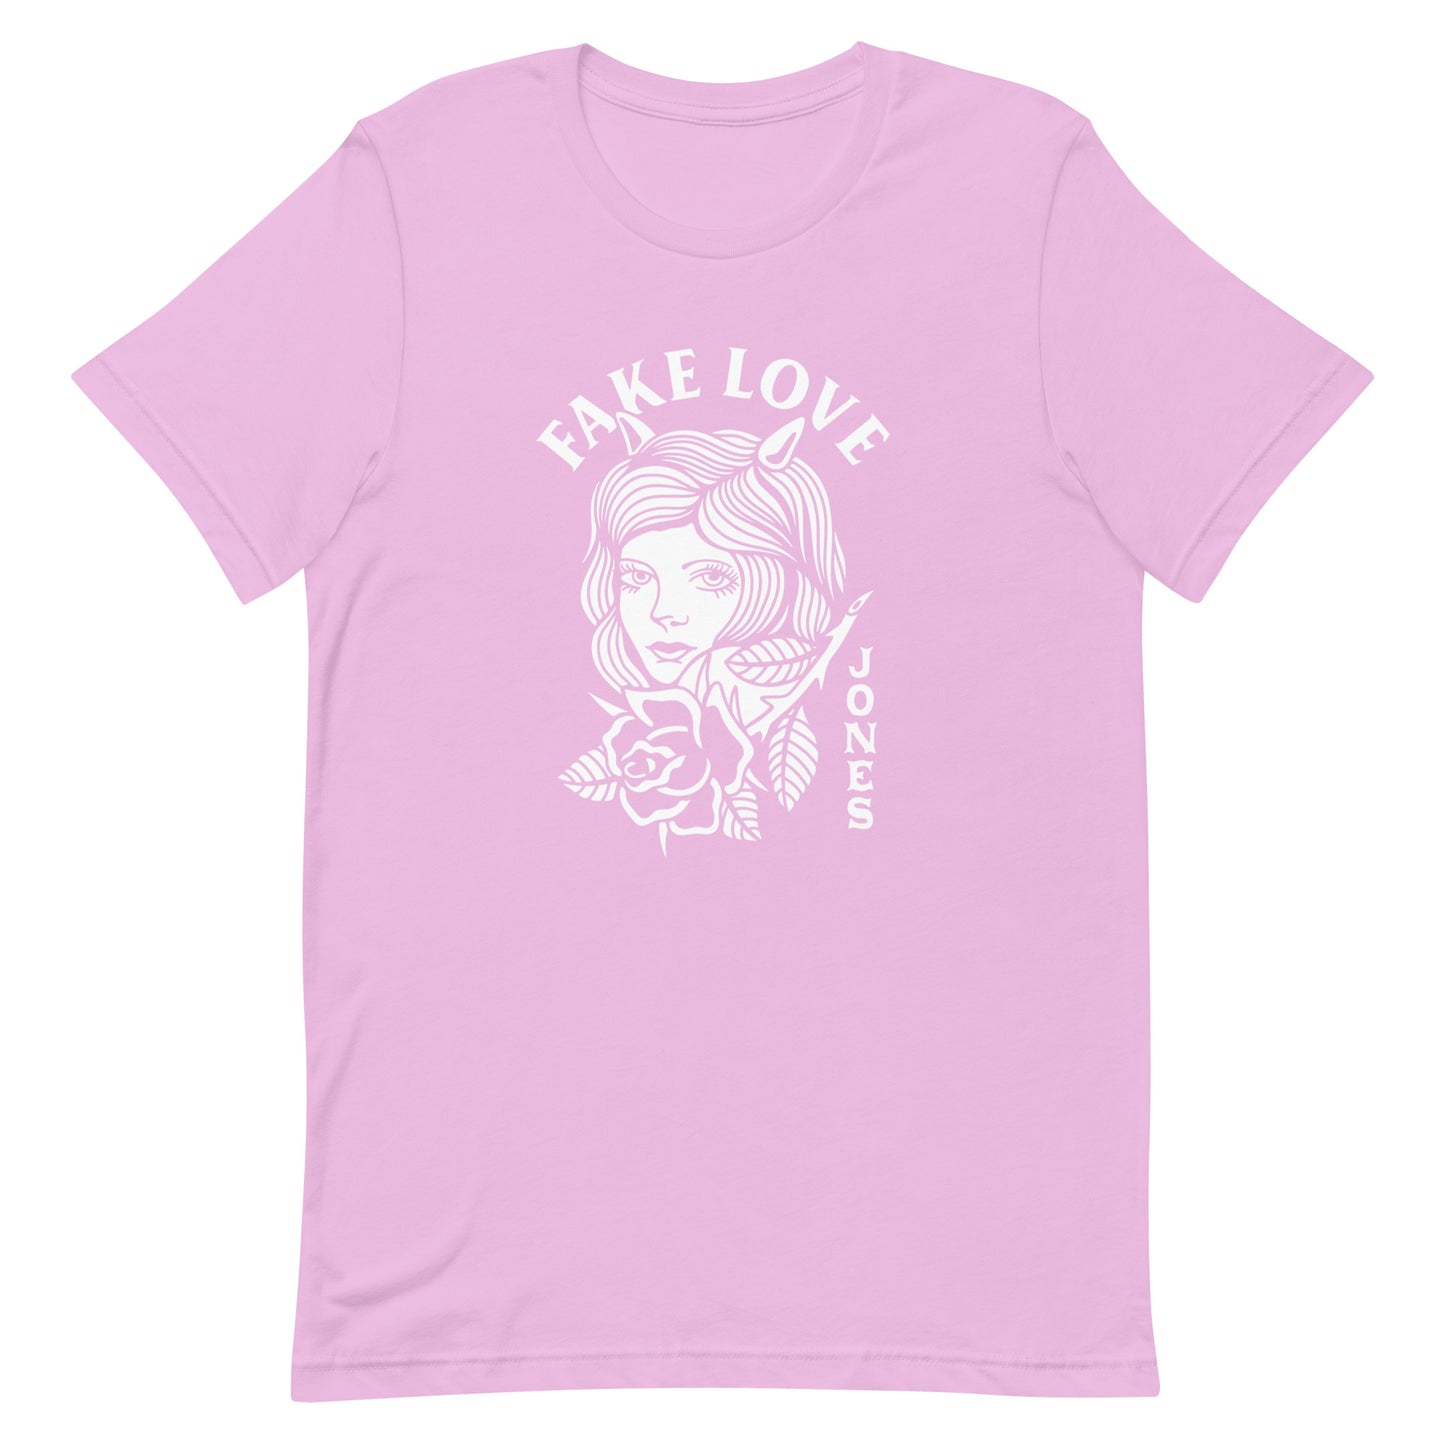 Jones - Fake Love T-Shirt (Unisex)